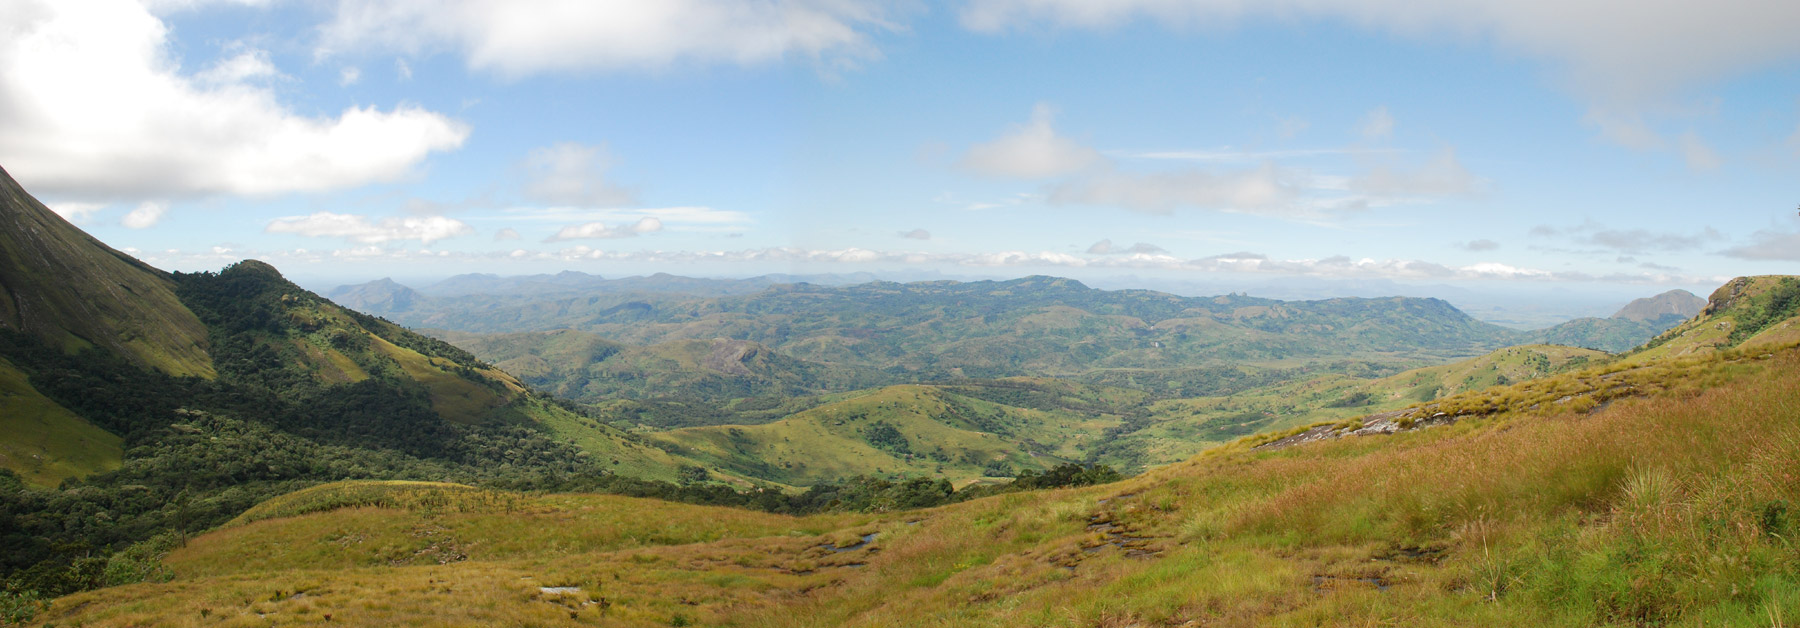 Panorama over Serra de Gurue from the base of Namuli peak.